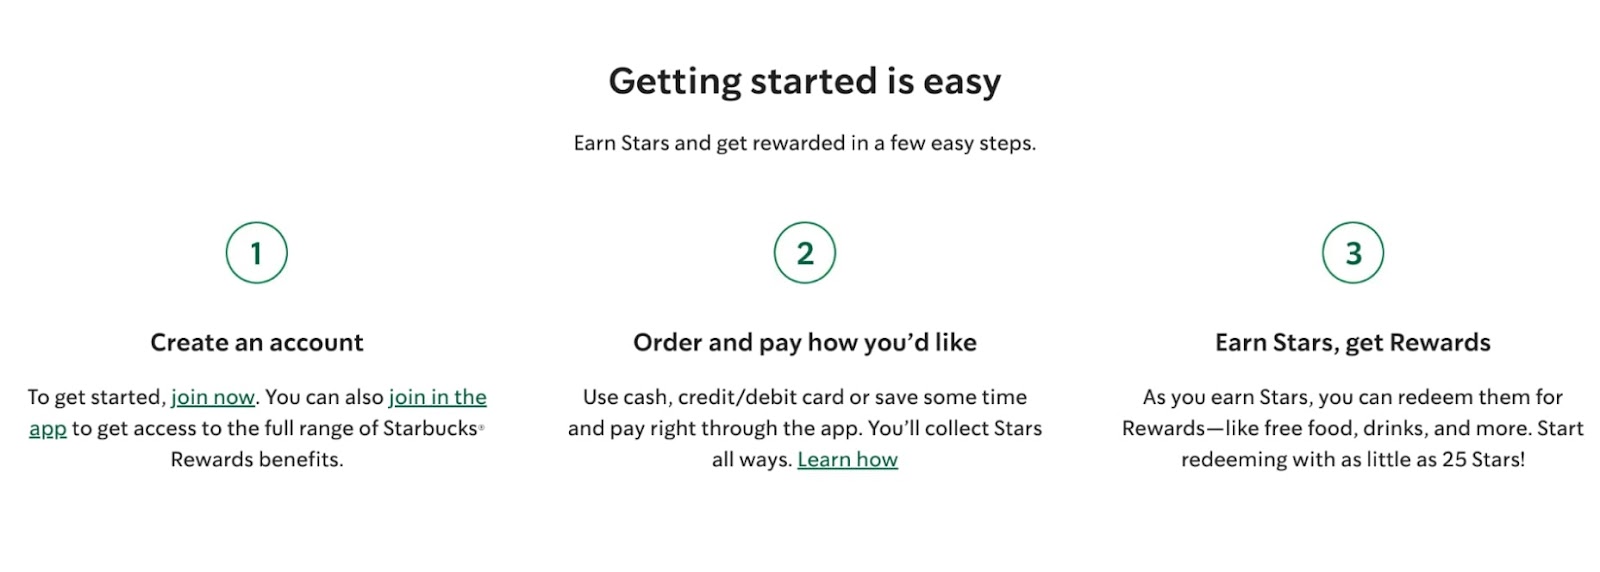 Starbucks Rewards program overview in 3 steps